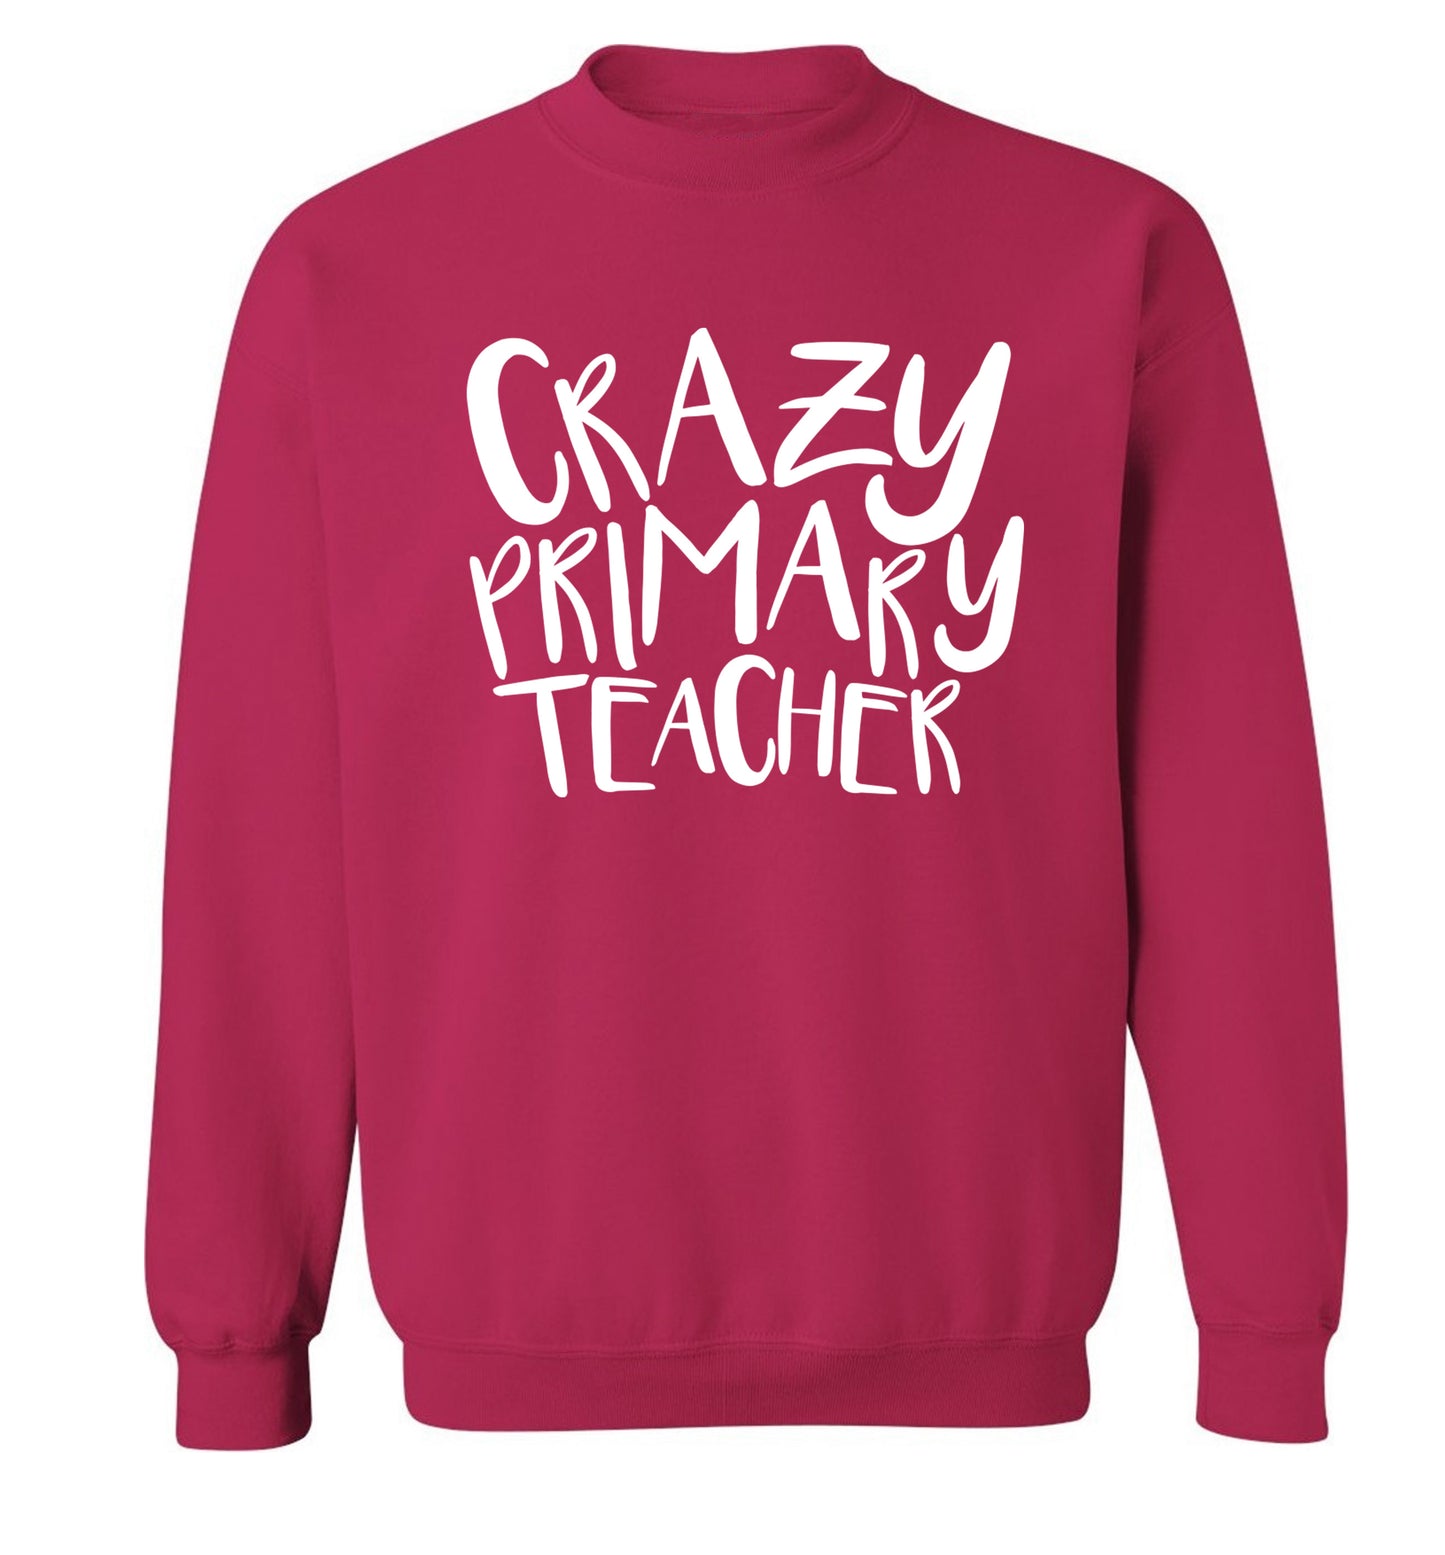 Crazy primary teacher Adult's unisex pink Sweater 2XL